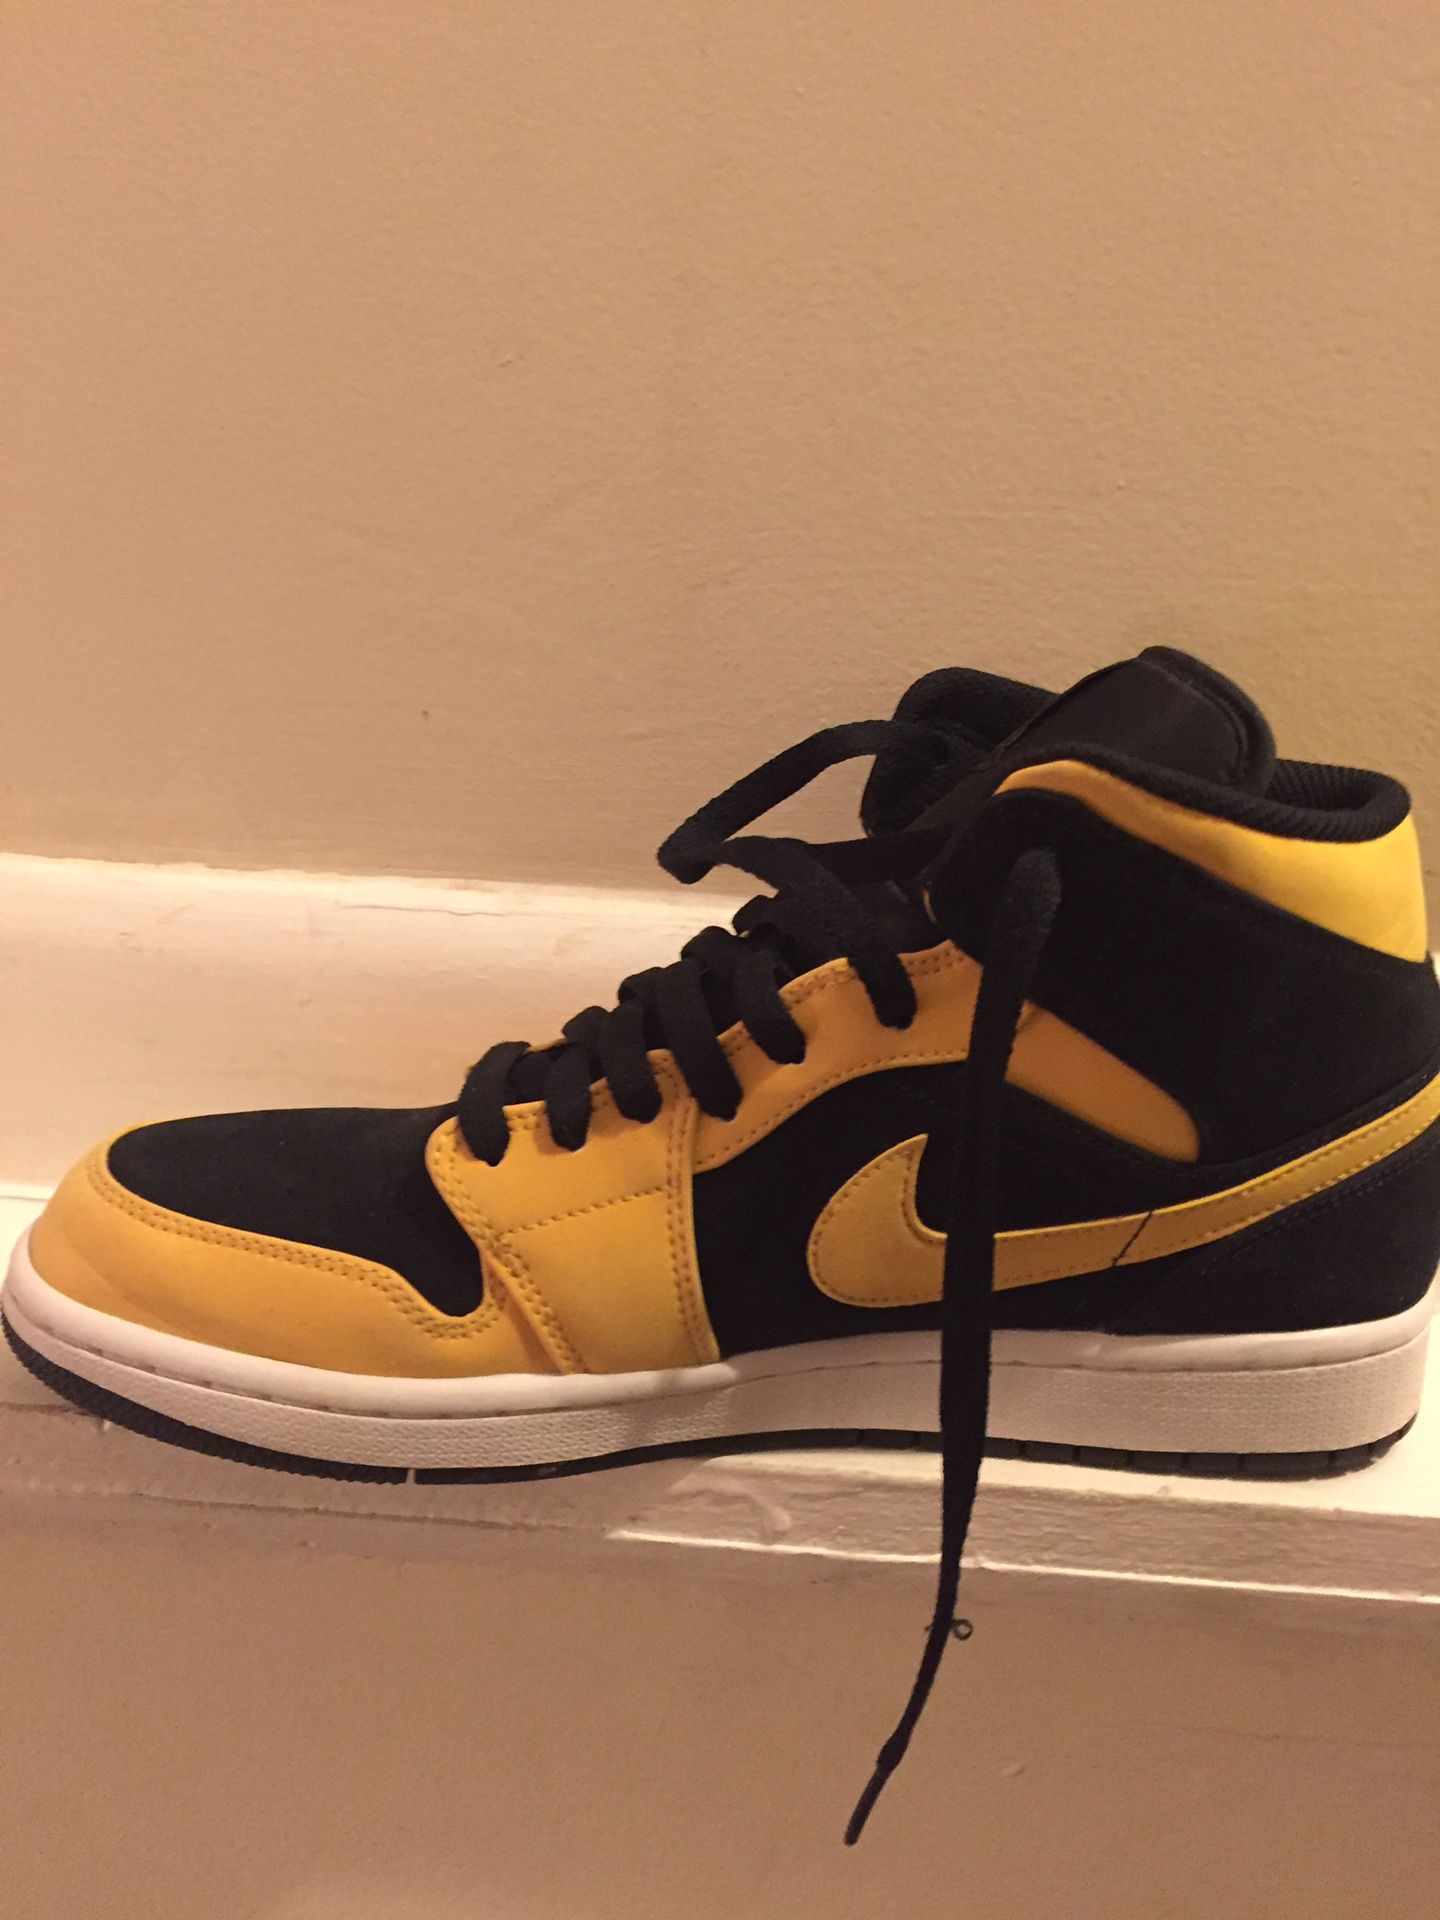 Jordan’s 1s (yellow & Black)